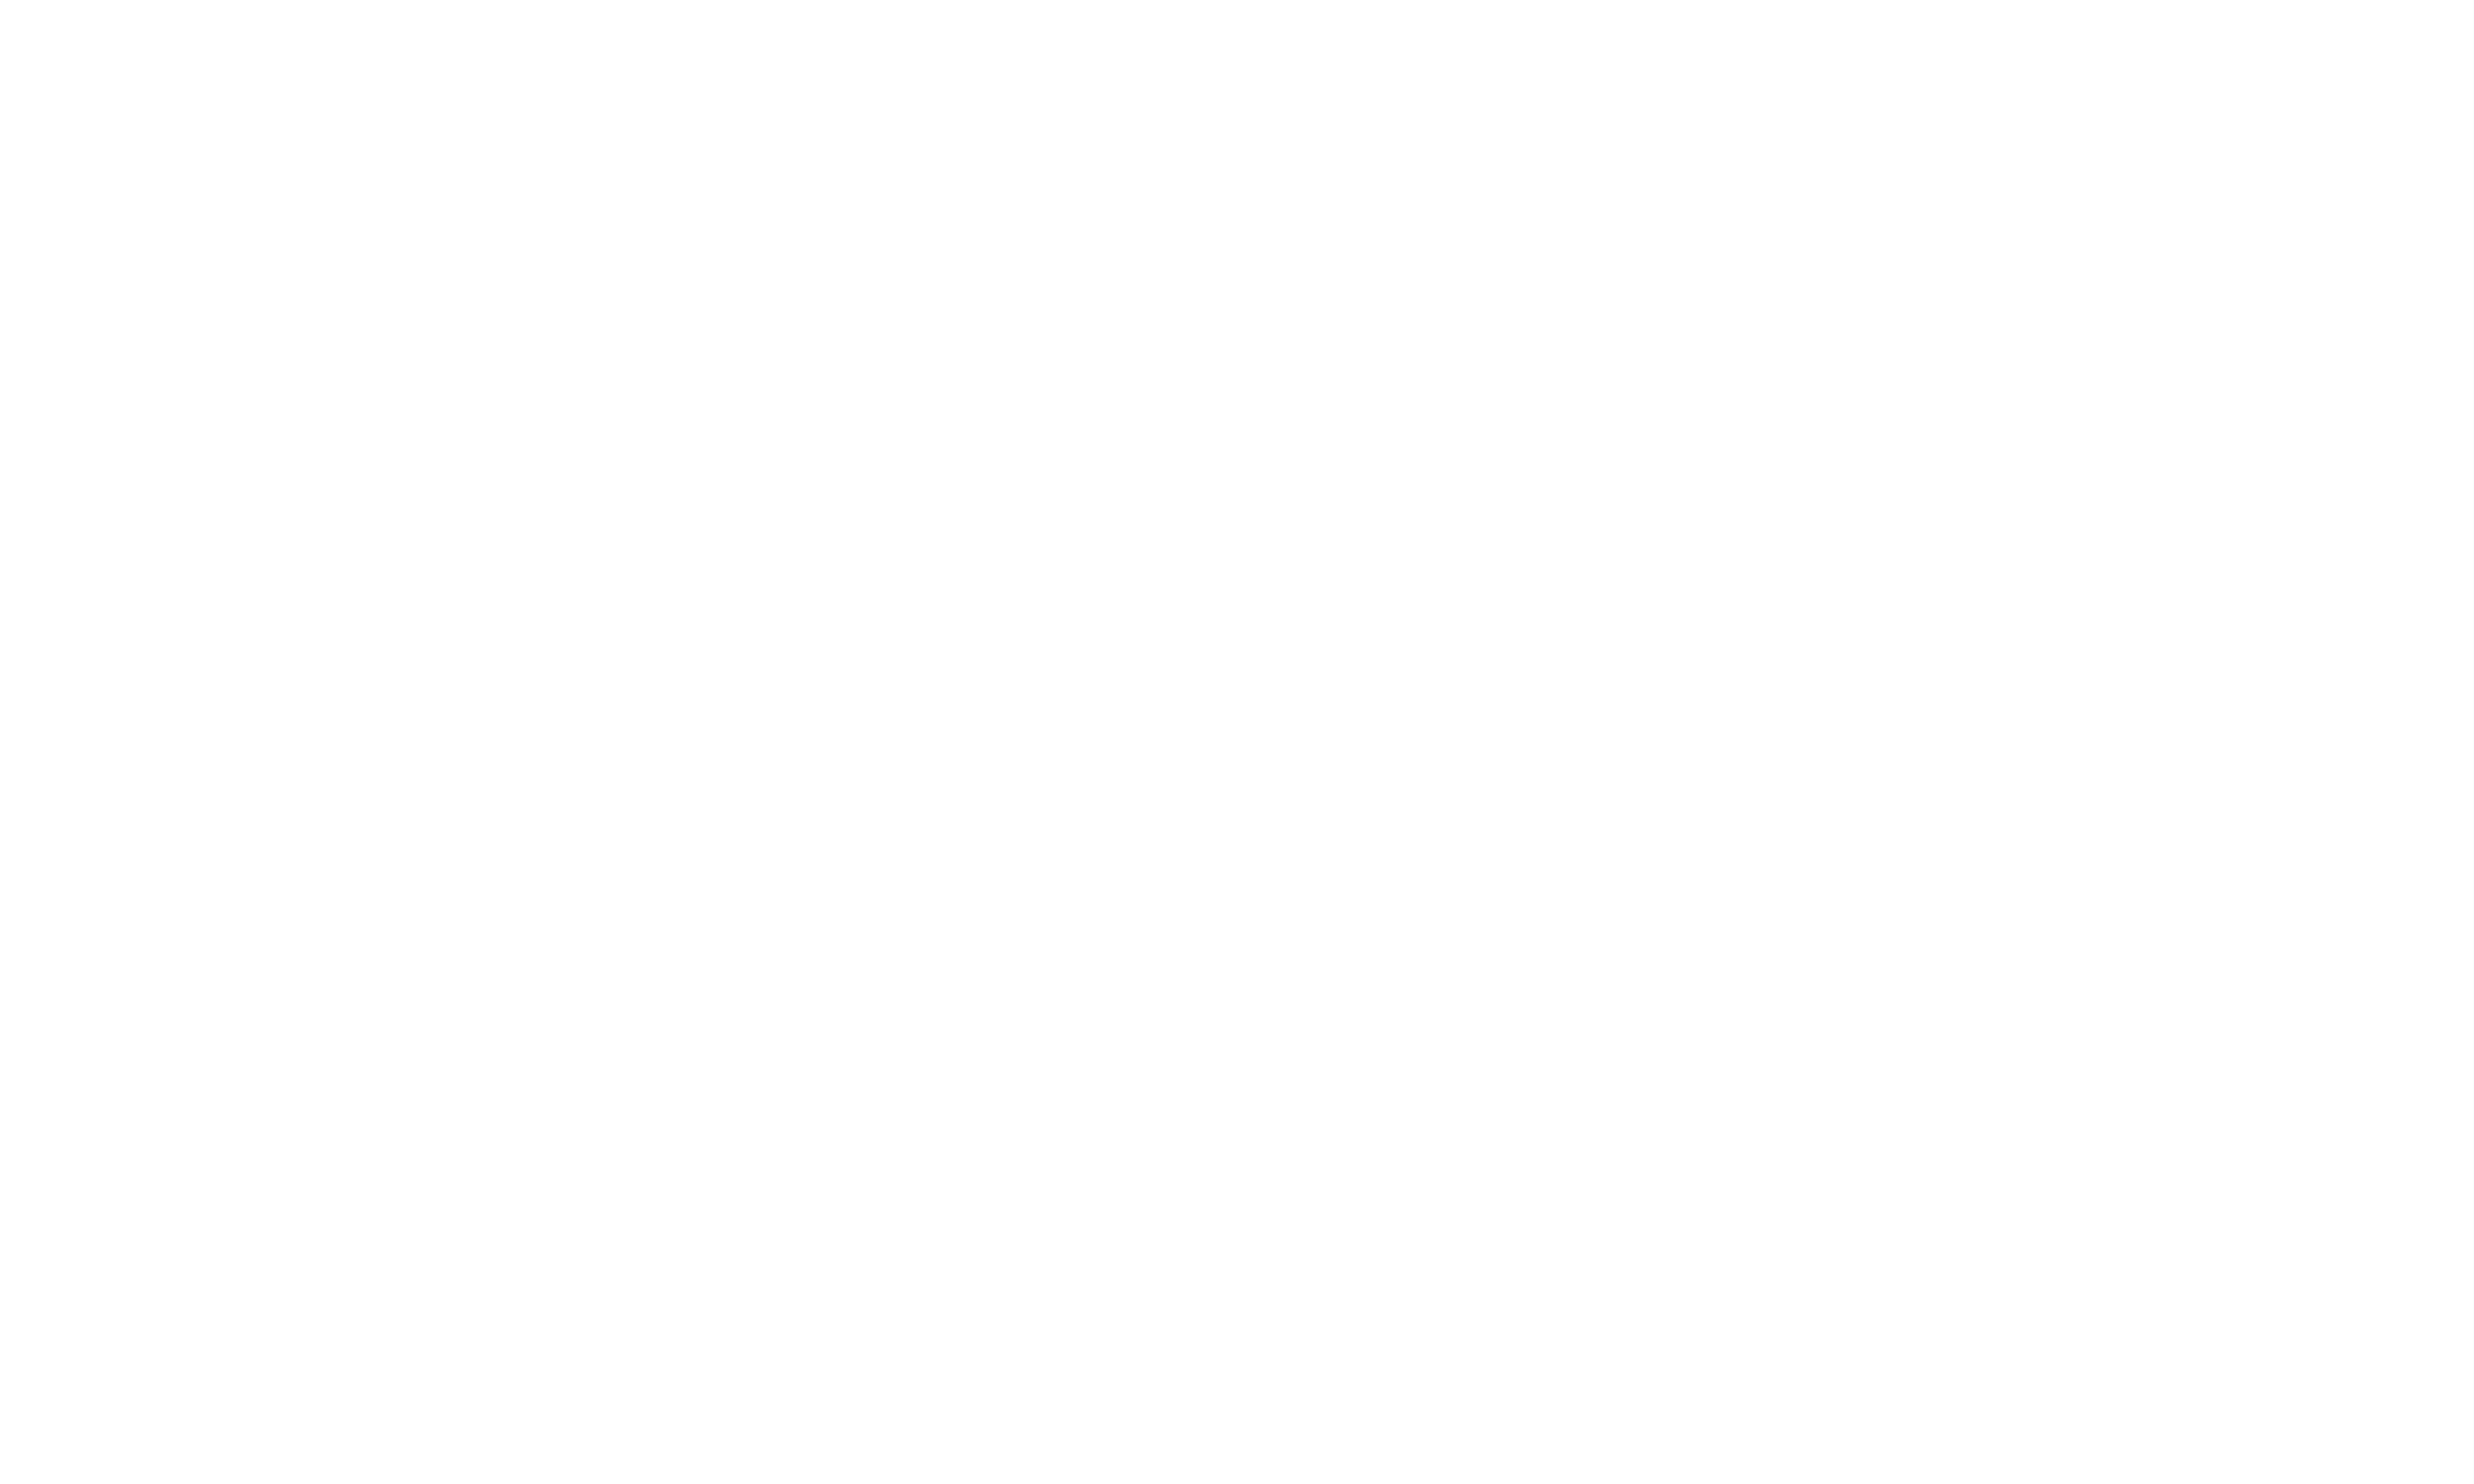 Graycliff Hall